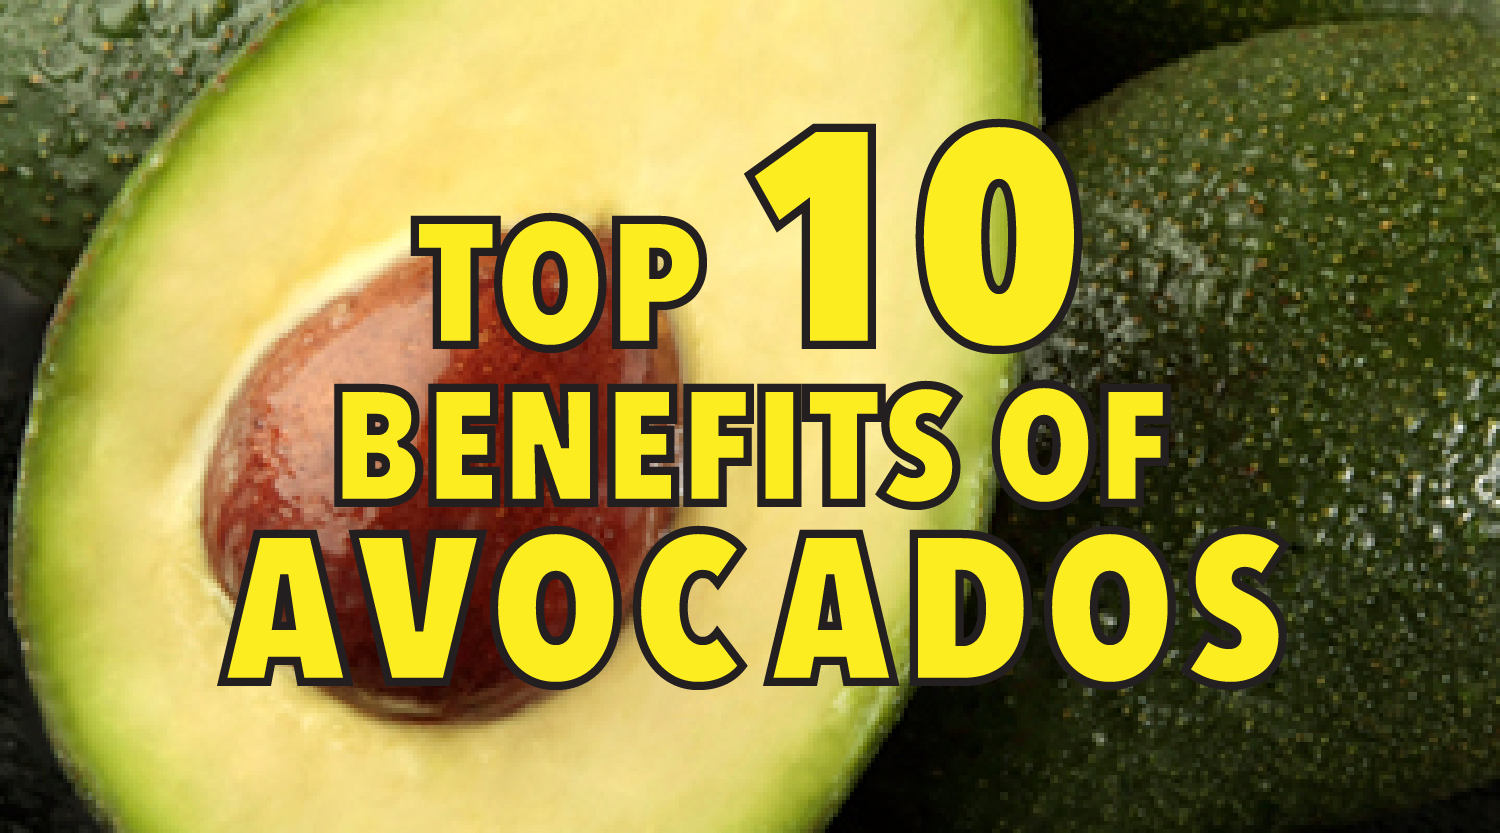 Top 10 benefits of avocados